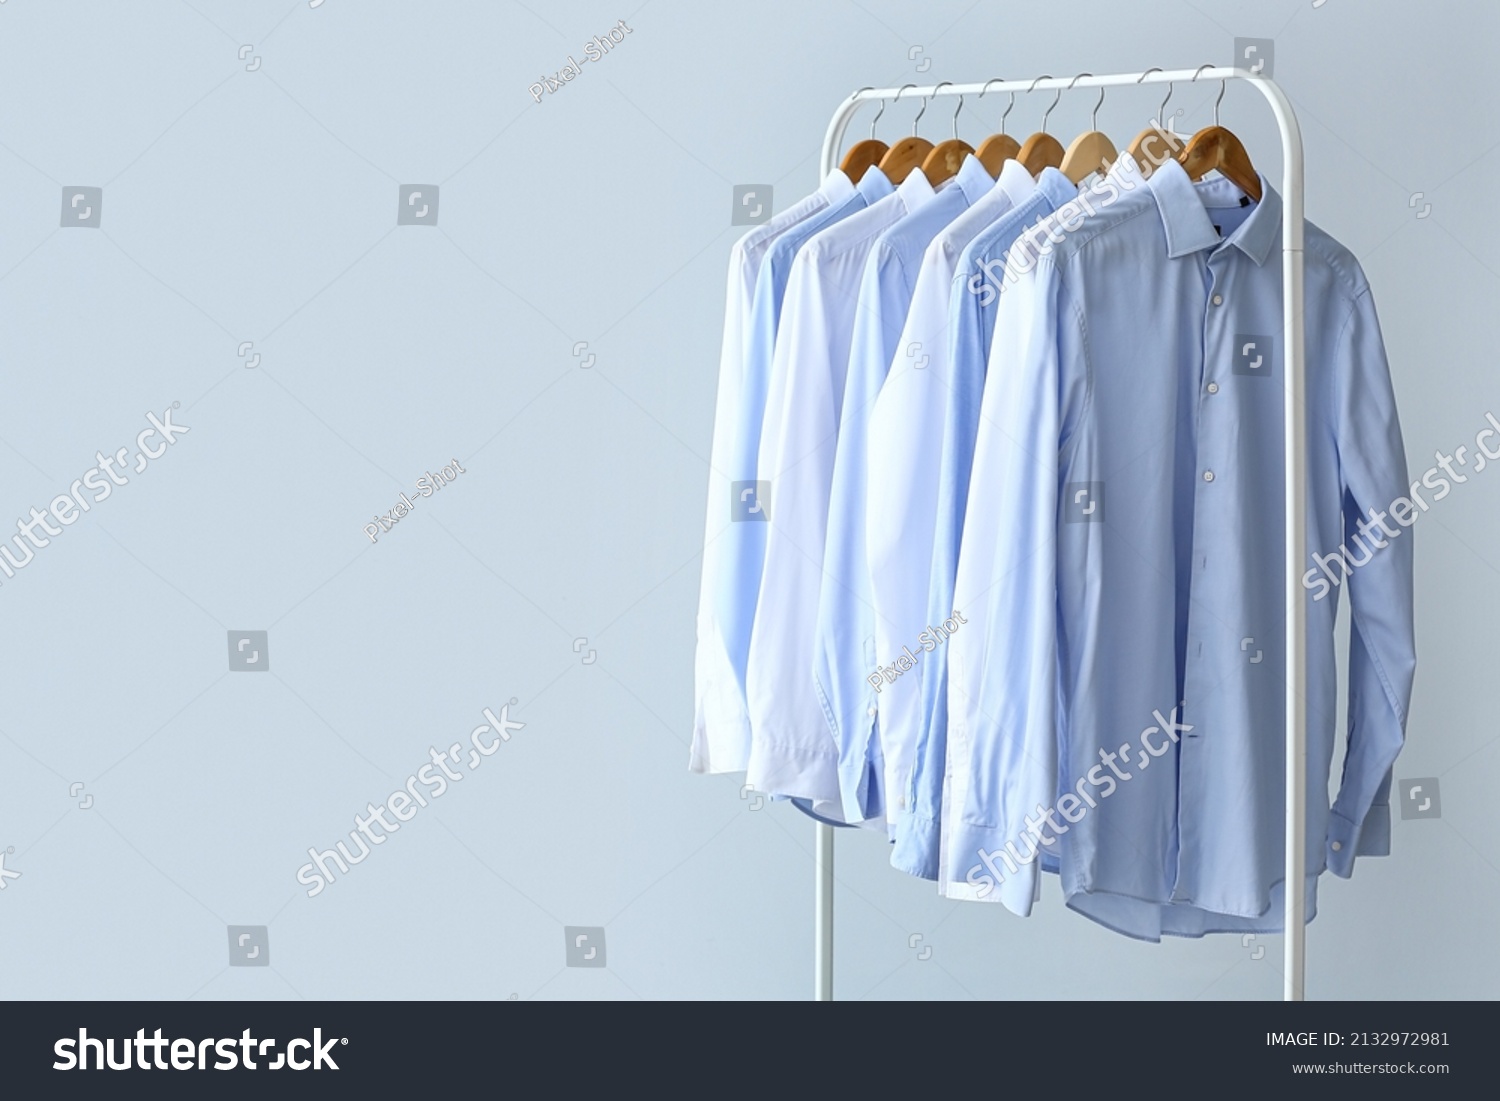 7,932 Folding rack Images, Stock Photos & Vectors | Shutterstock